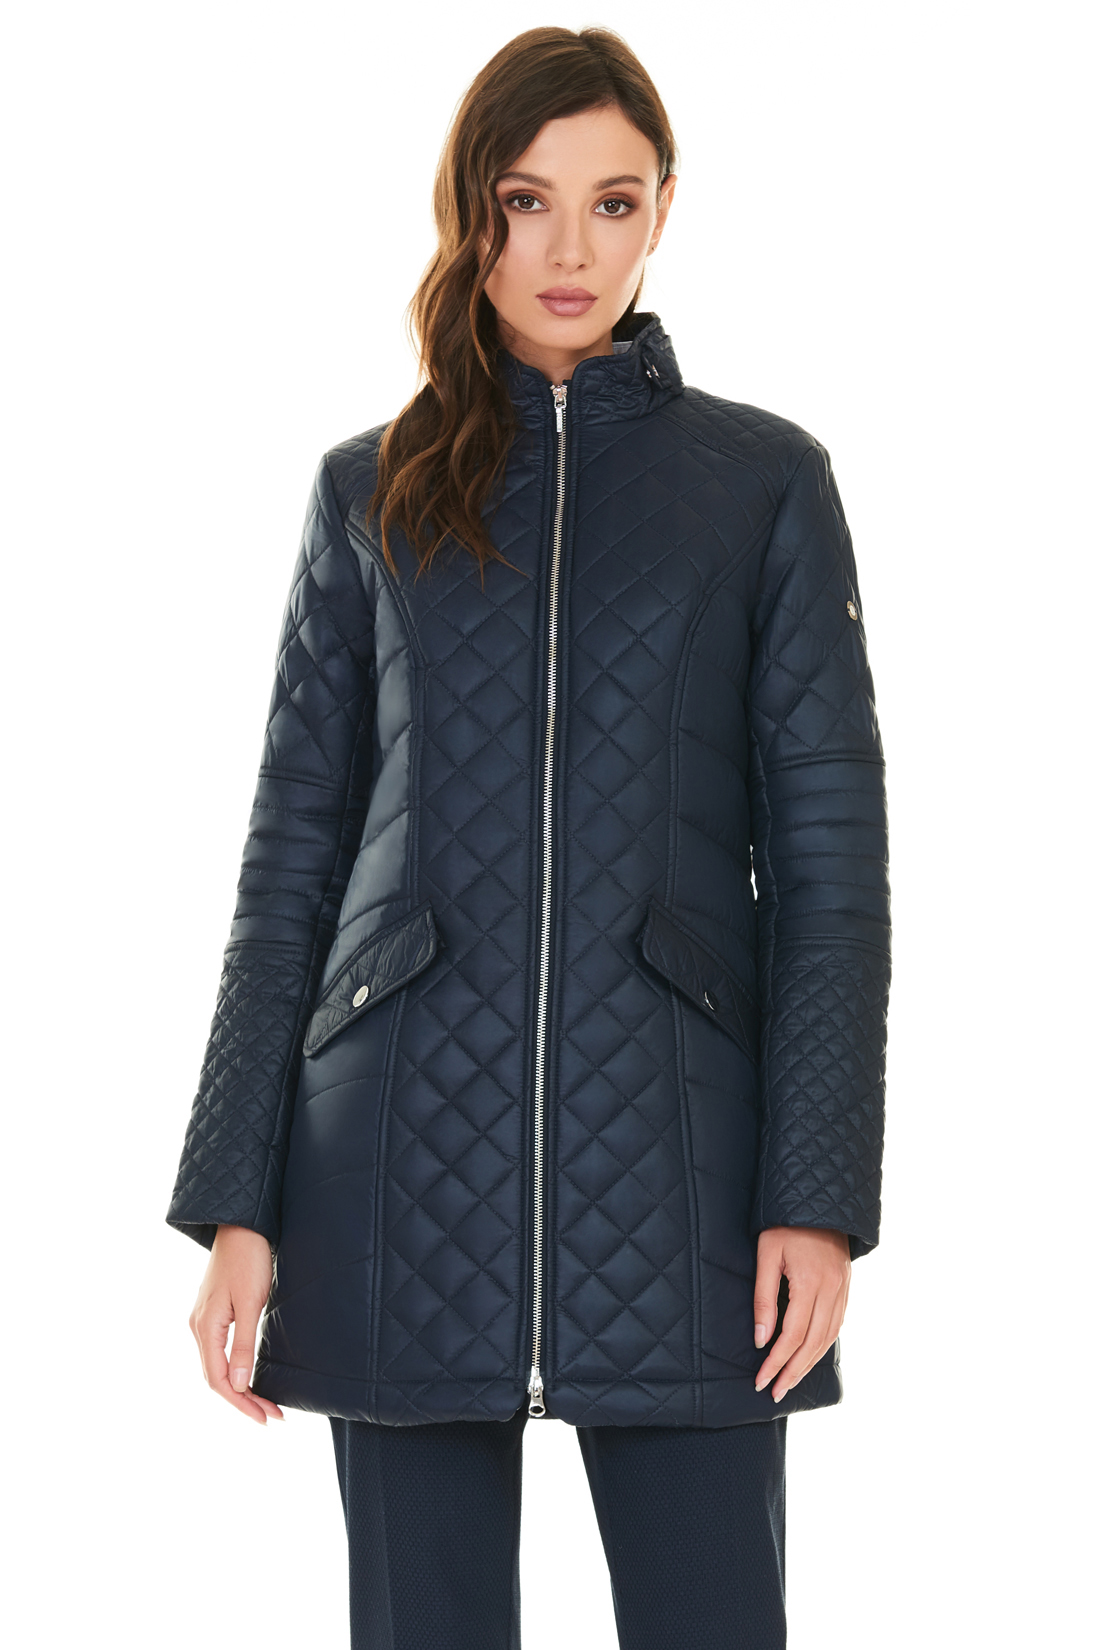 Удлинённая стёганая куртка (арт. baon B037535), размер XL, цвет синий Удлинённая стёганая куртка (арт. baon B037535) - фото 1